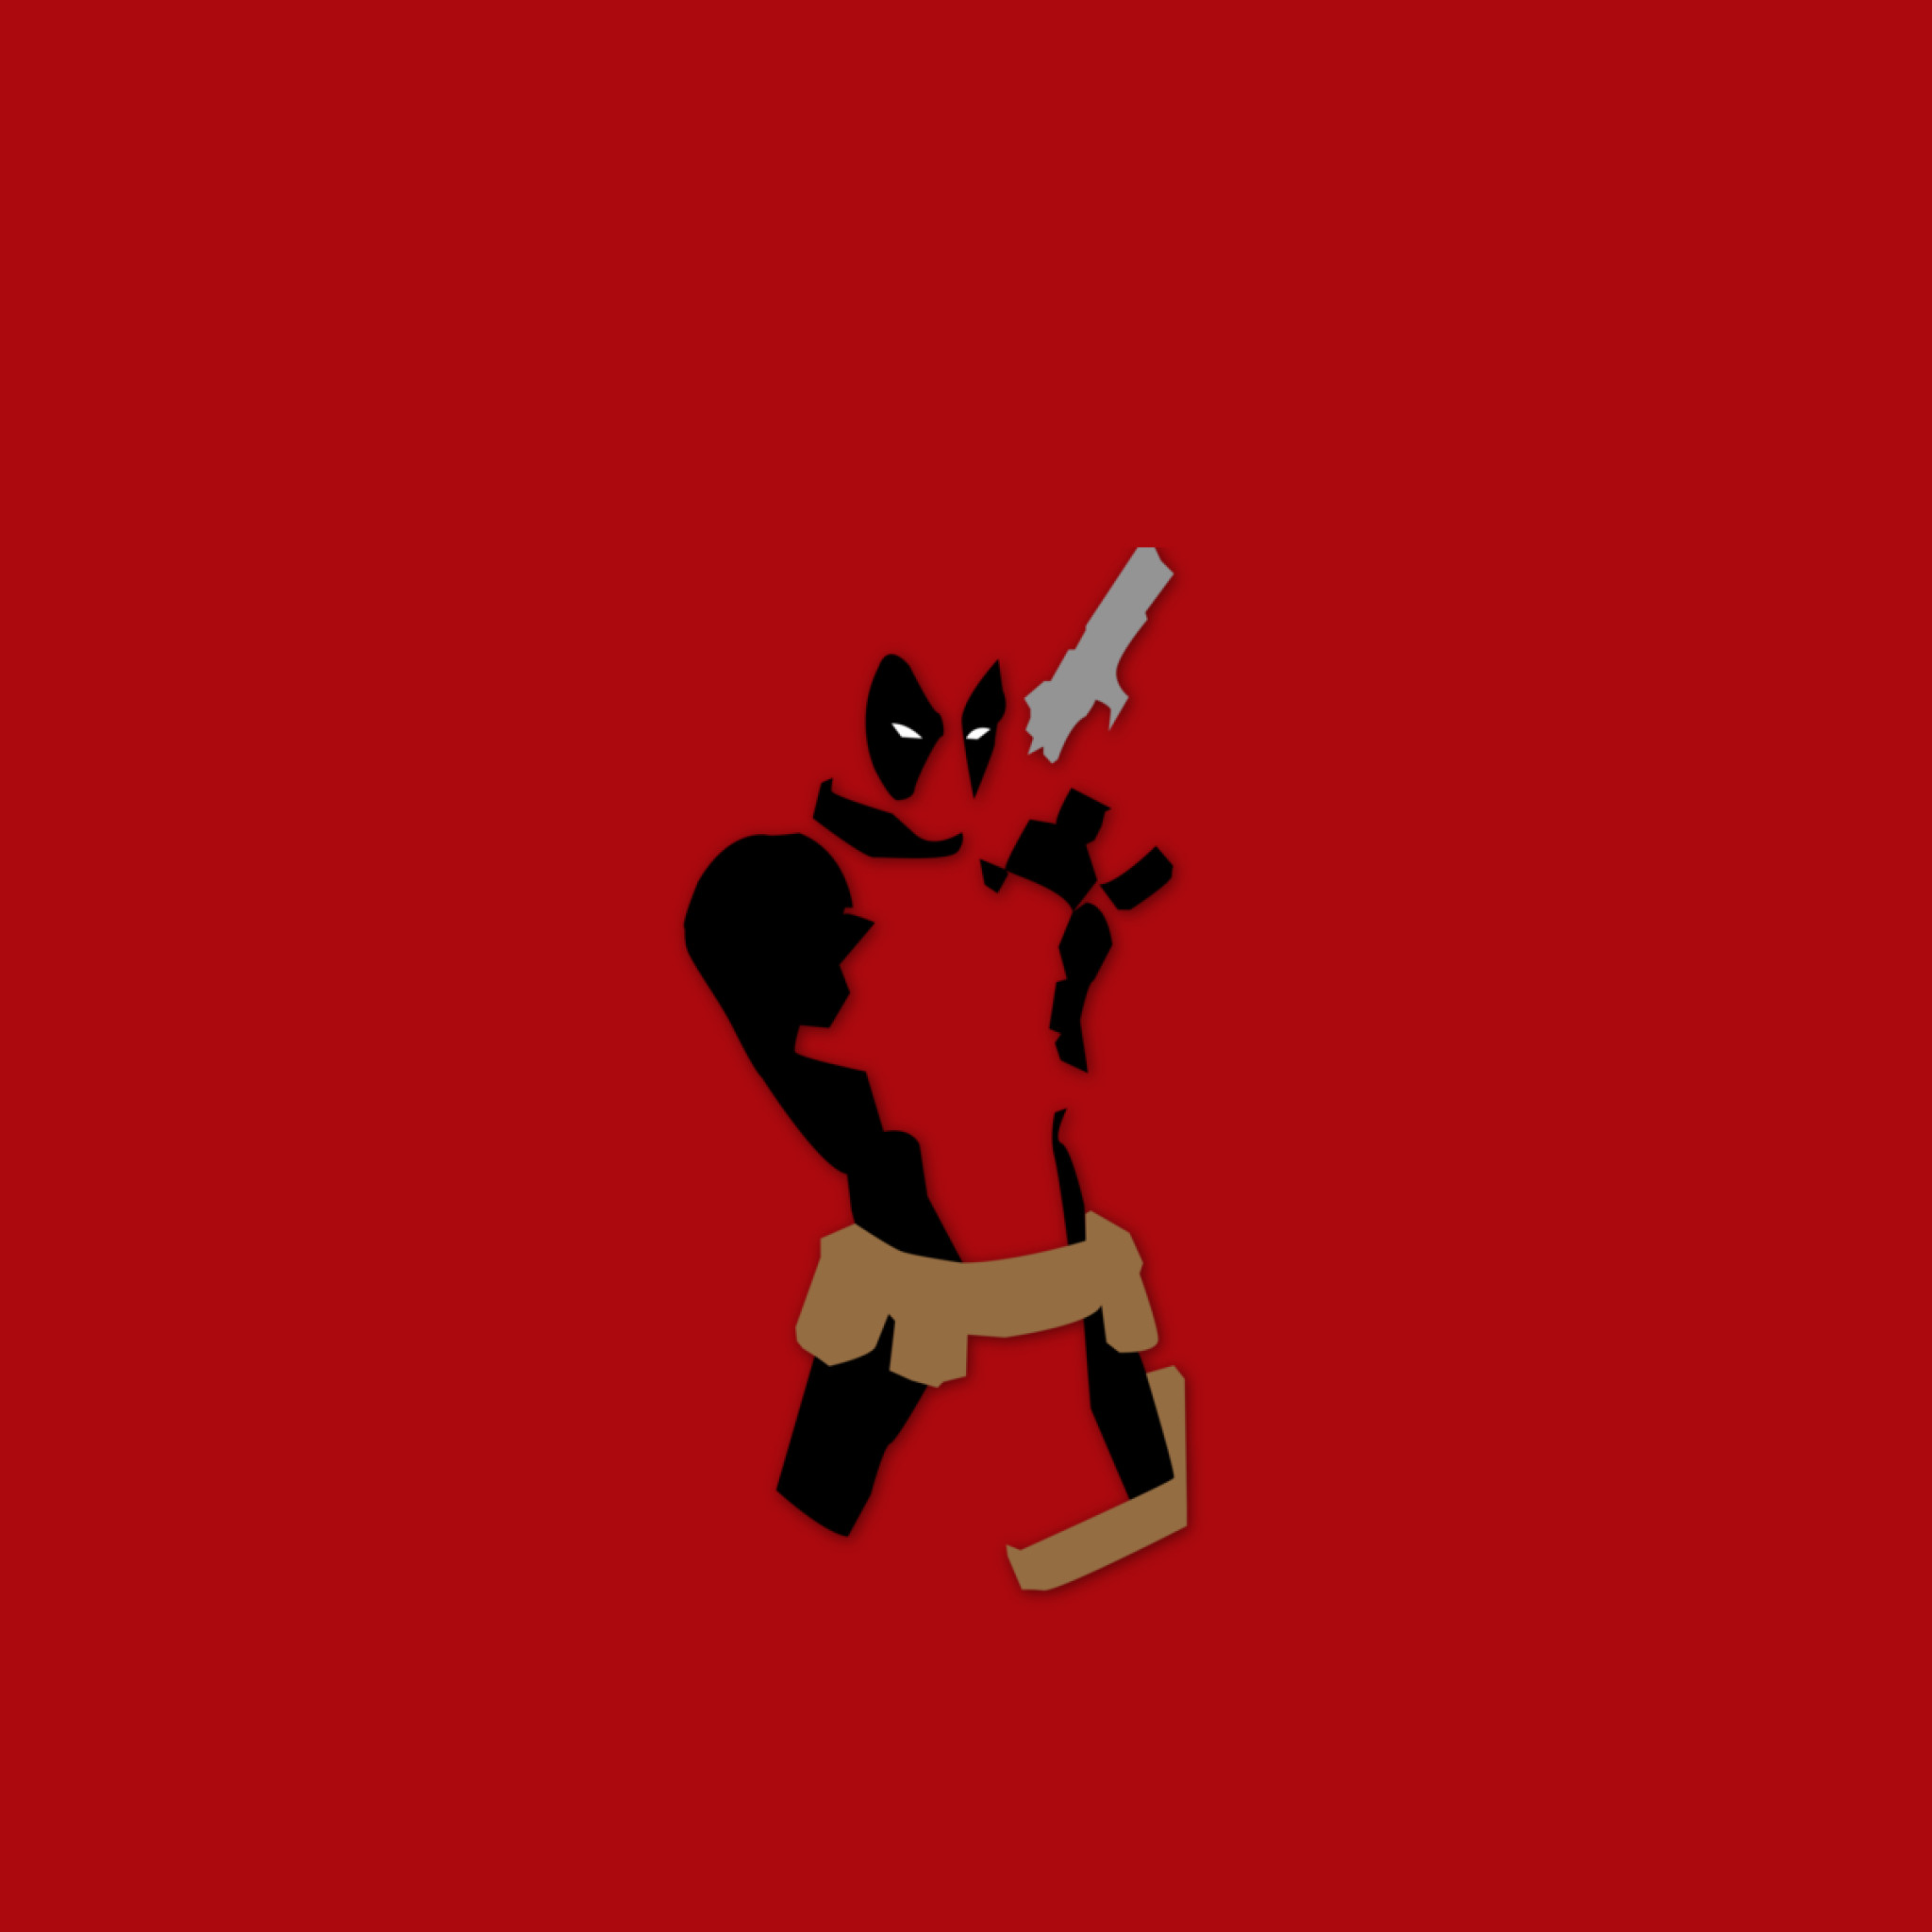 2048x2048 Download Red Deadpool 2048 x 2048 Wallpapers - 4590762 - adventure  superhero ryan reynolds gina carano marvel tim miller deadpool | mobile9